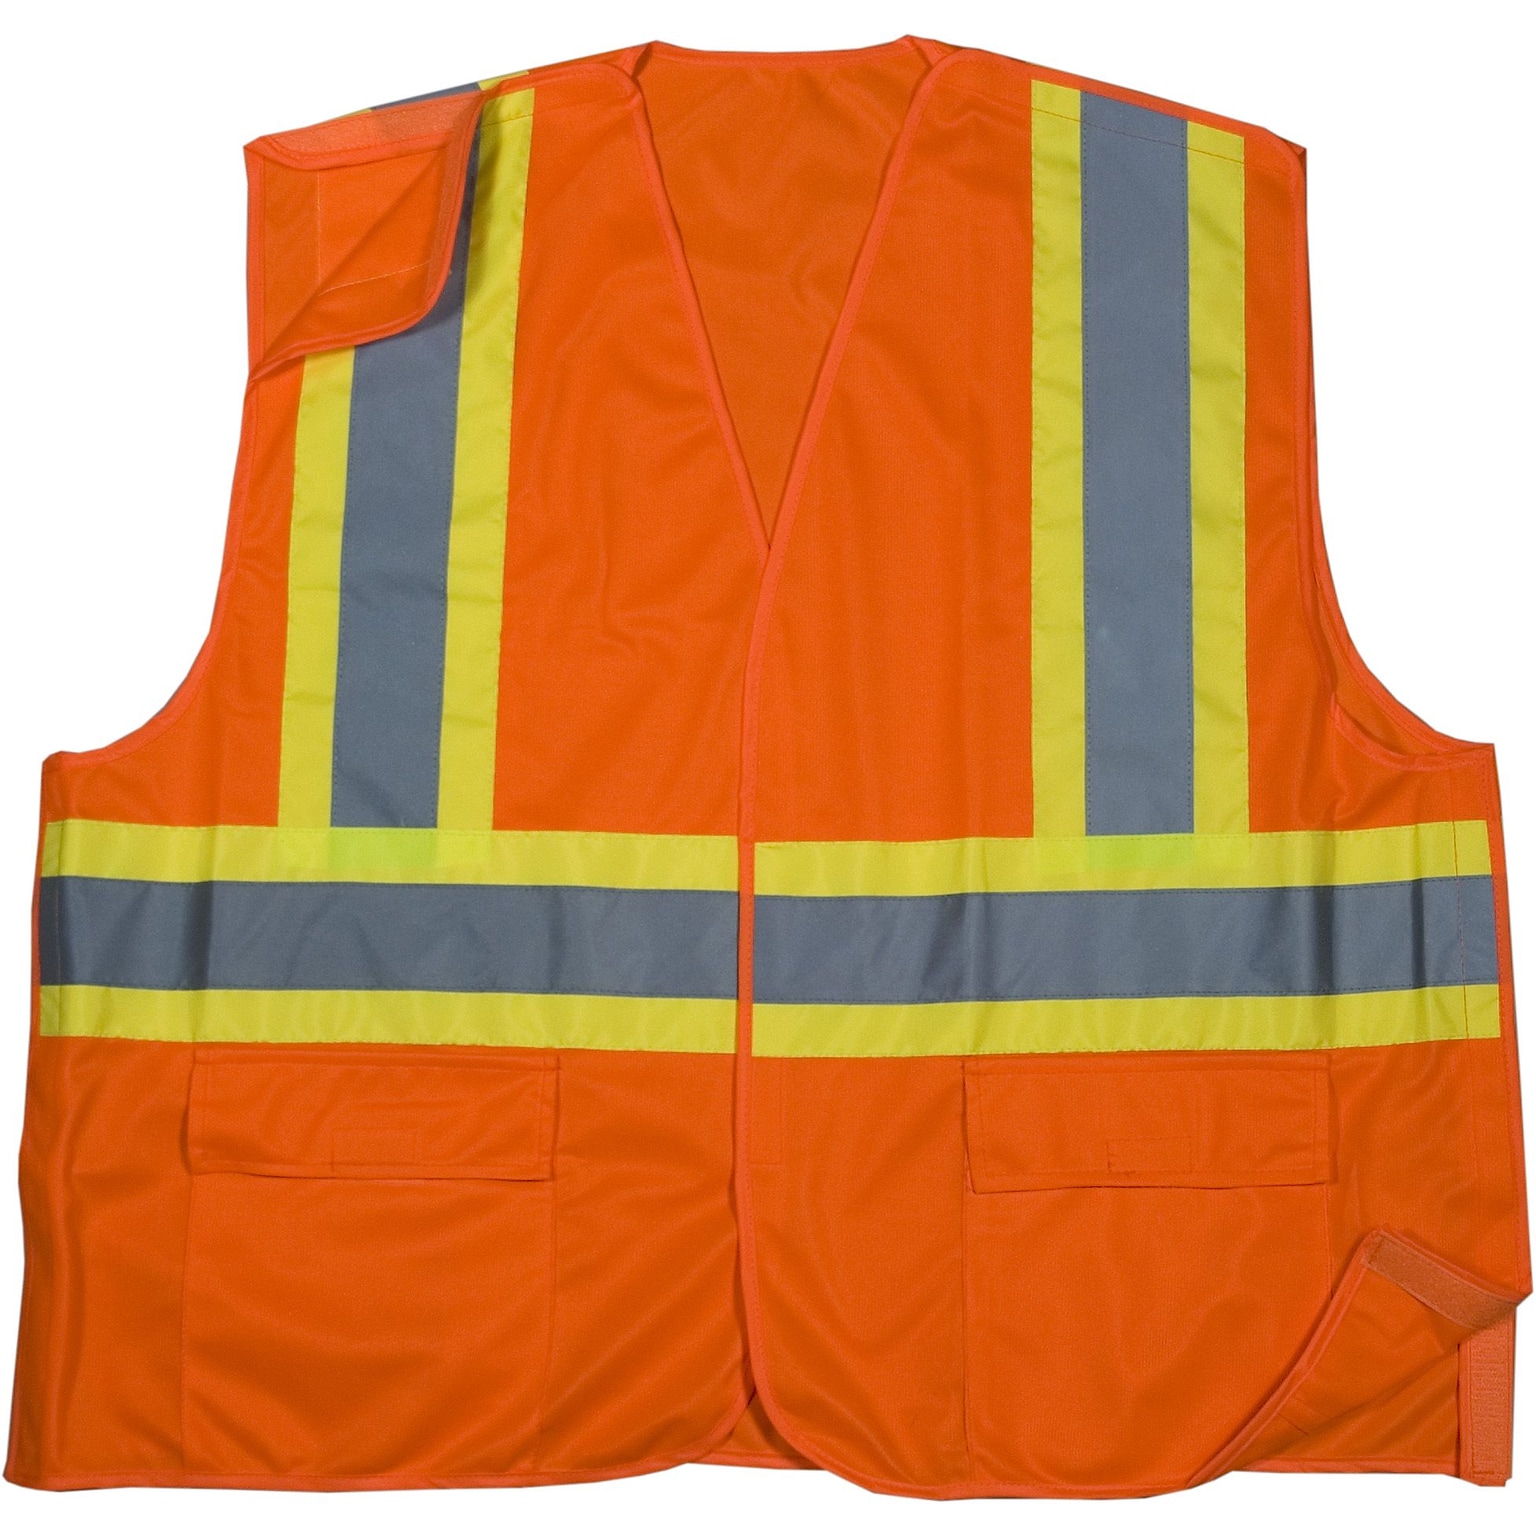 Mutual Industries MiViz High Visibility Sleeveless Safety Vest, ANSI Class R3, Orange, X-Large (16389-0-4)